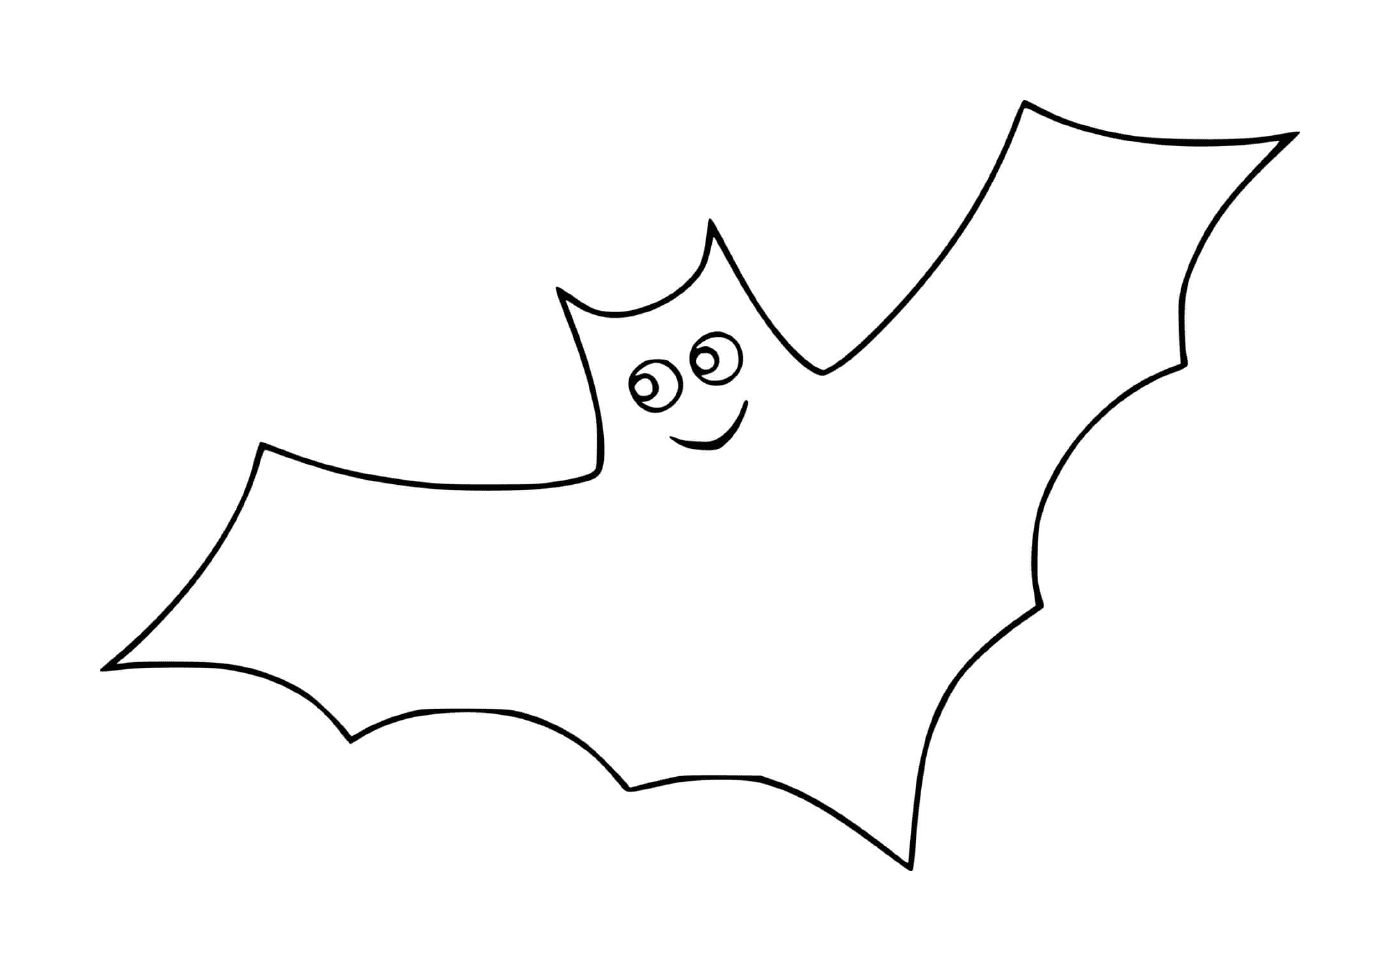  bat sorrindo em voo 